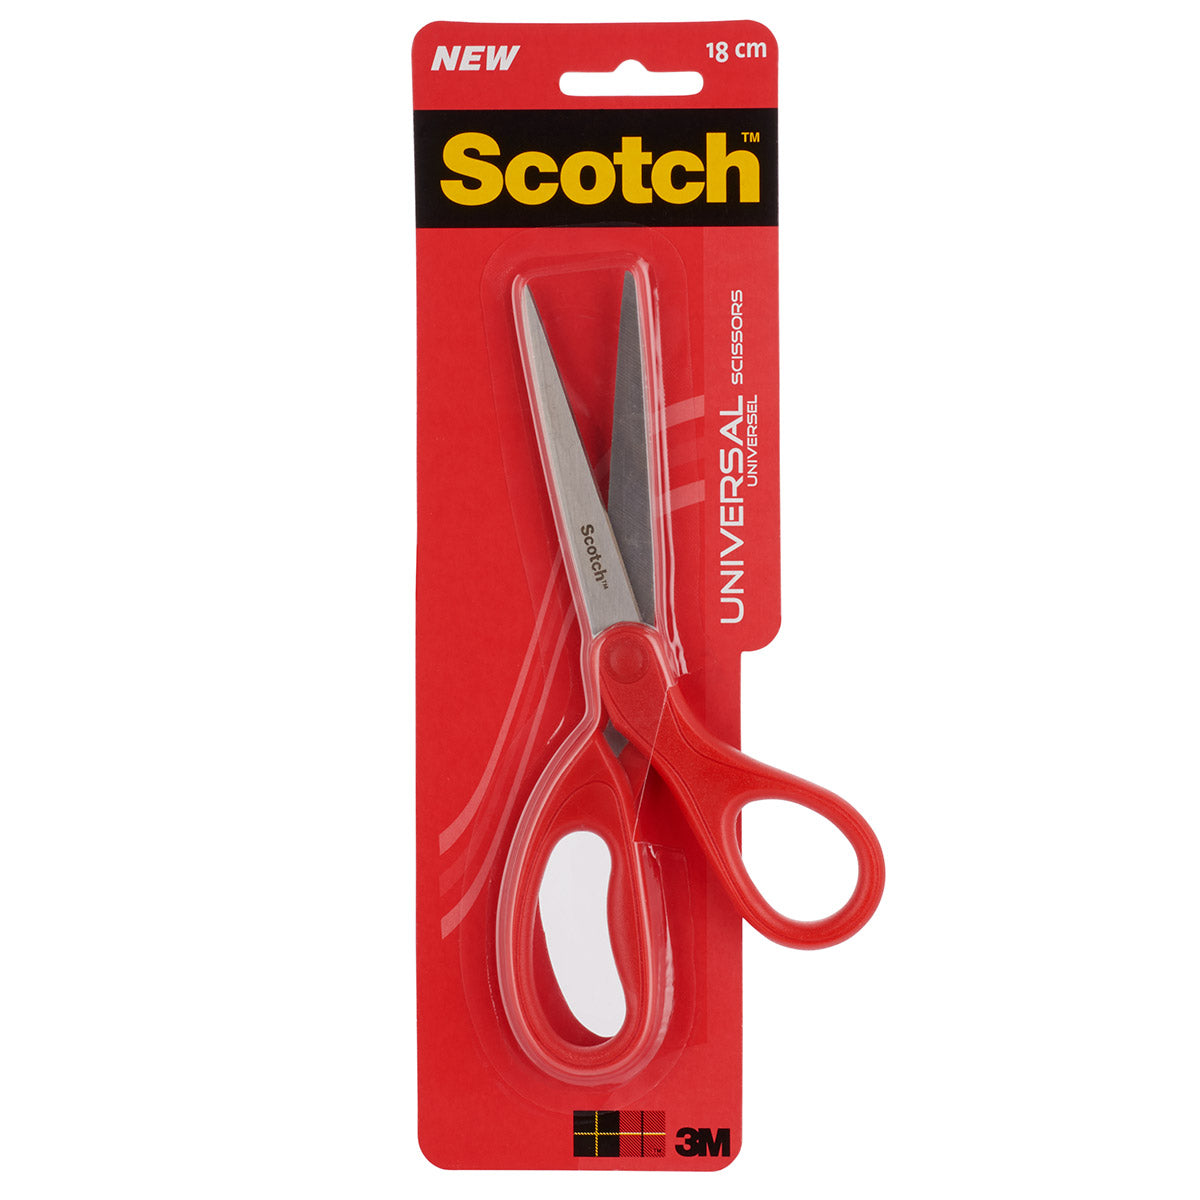 Scotch - Universal Adult Scissors Red 18 cm